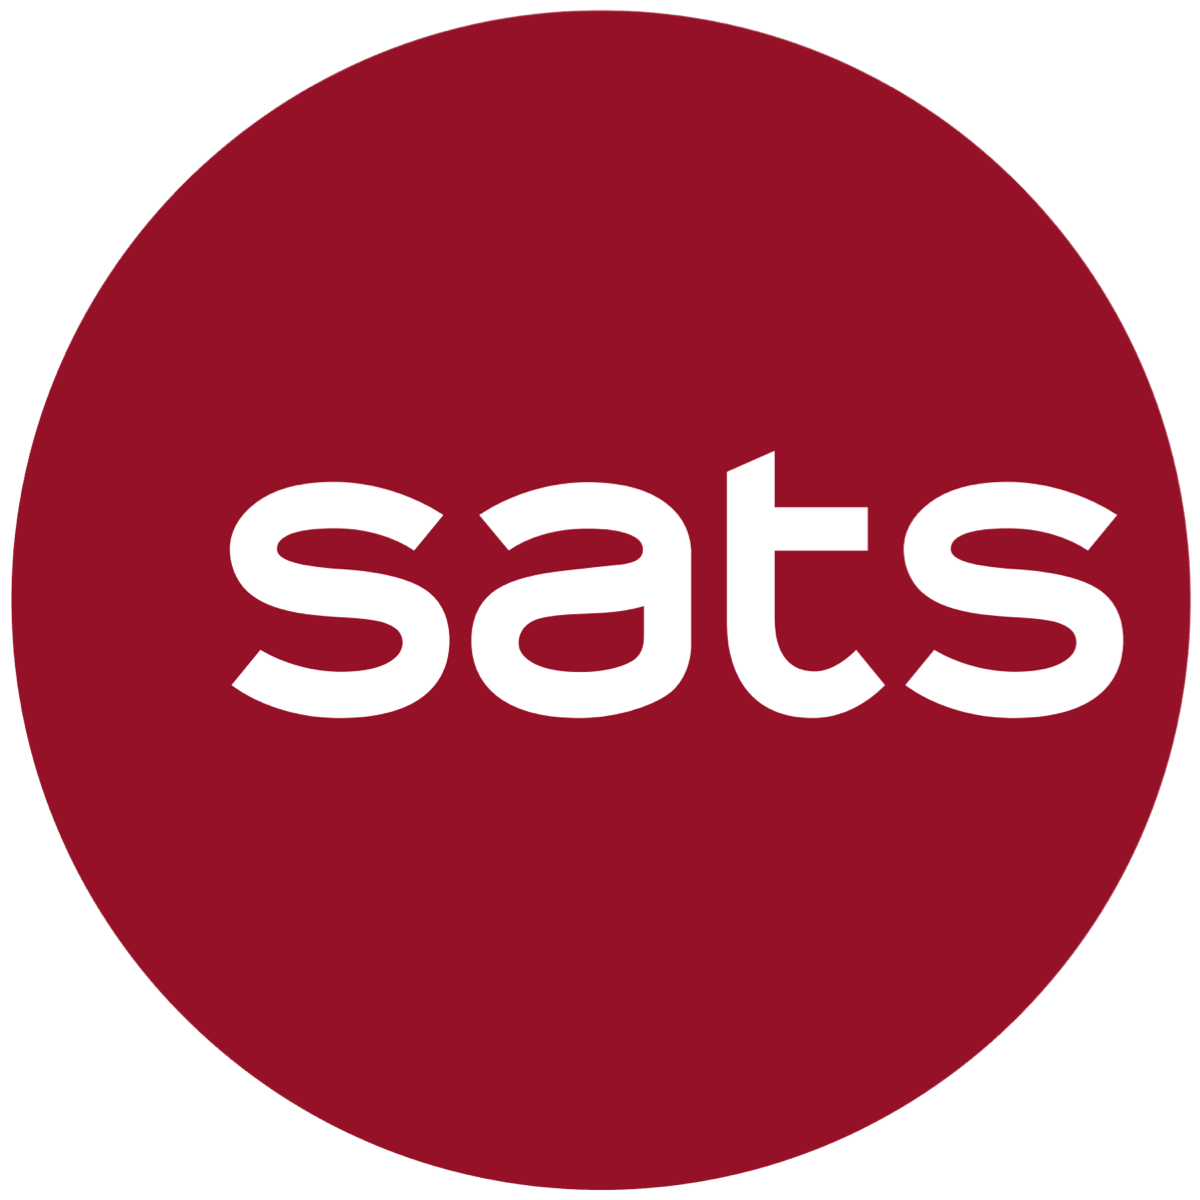 SATS (SATS SP) - UOB Kay Hian 2017-09-13: Risk/Reward Tilted Towards The Upside, Expecting 16% Total Return Over The Next 12 Months